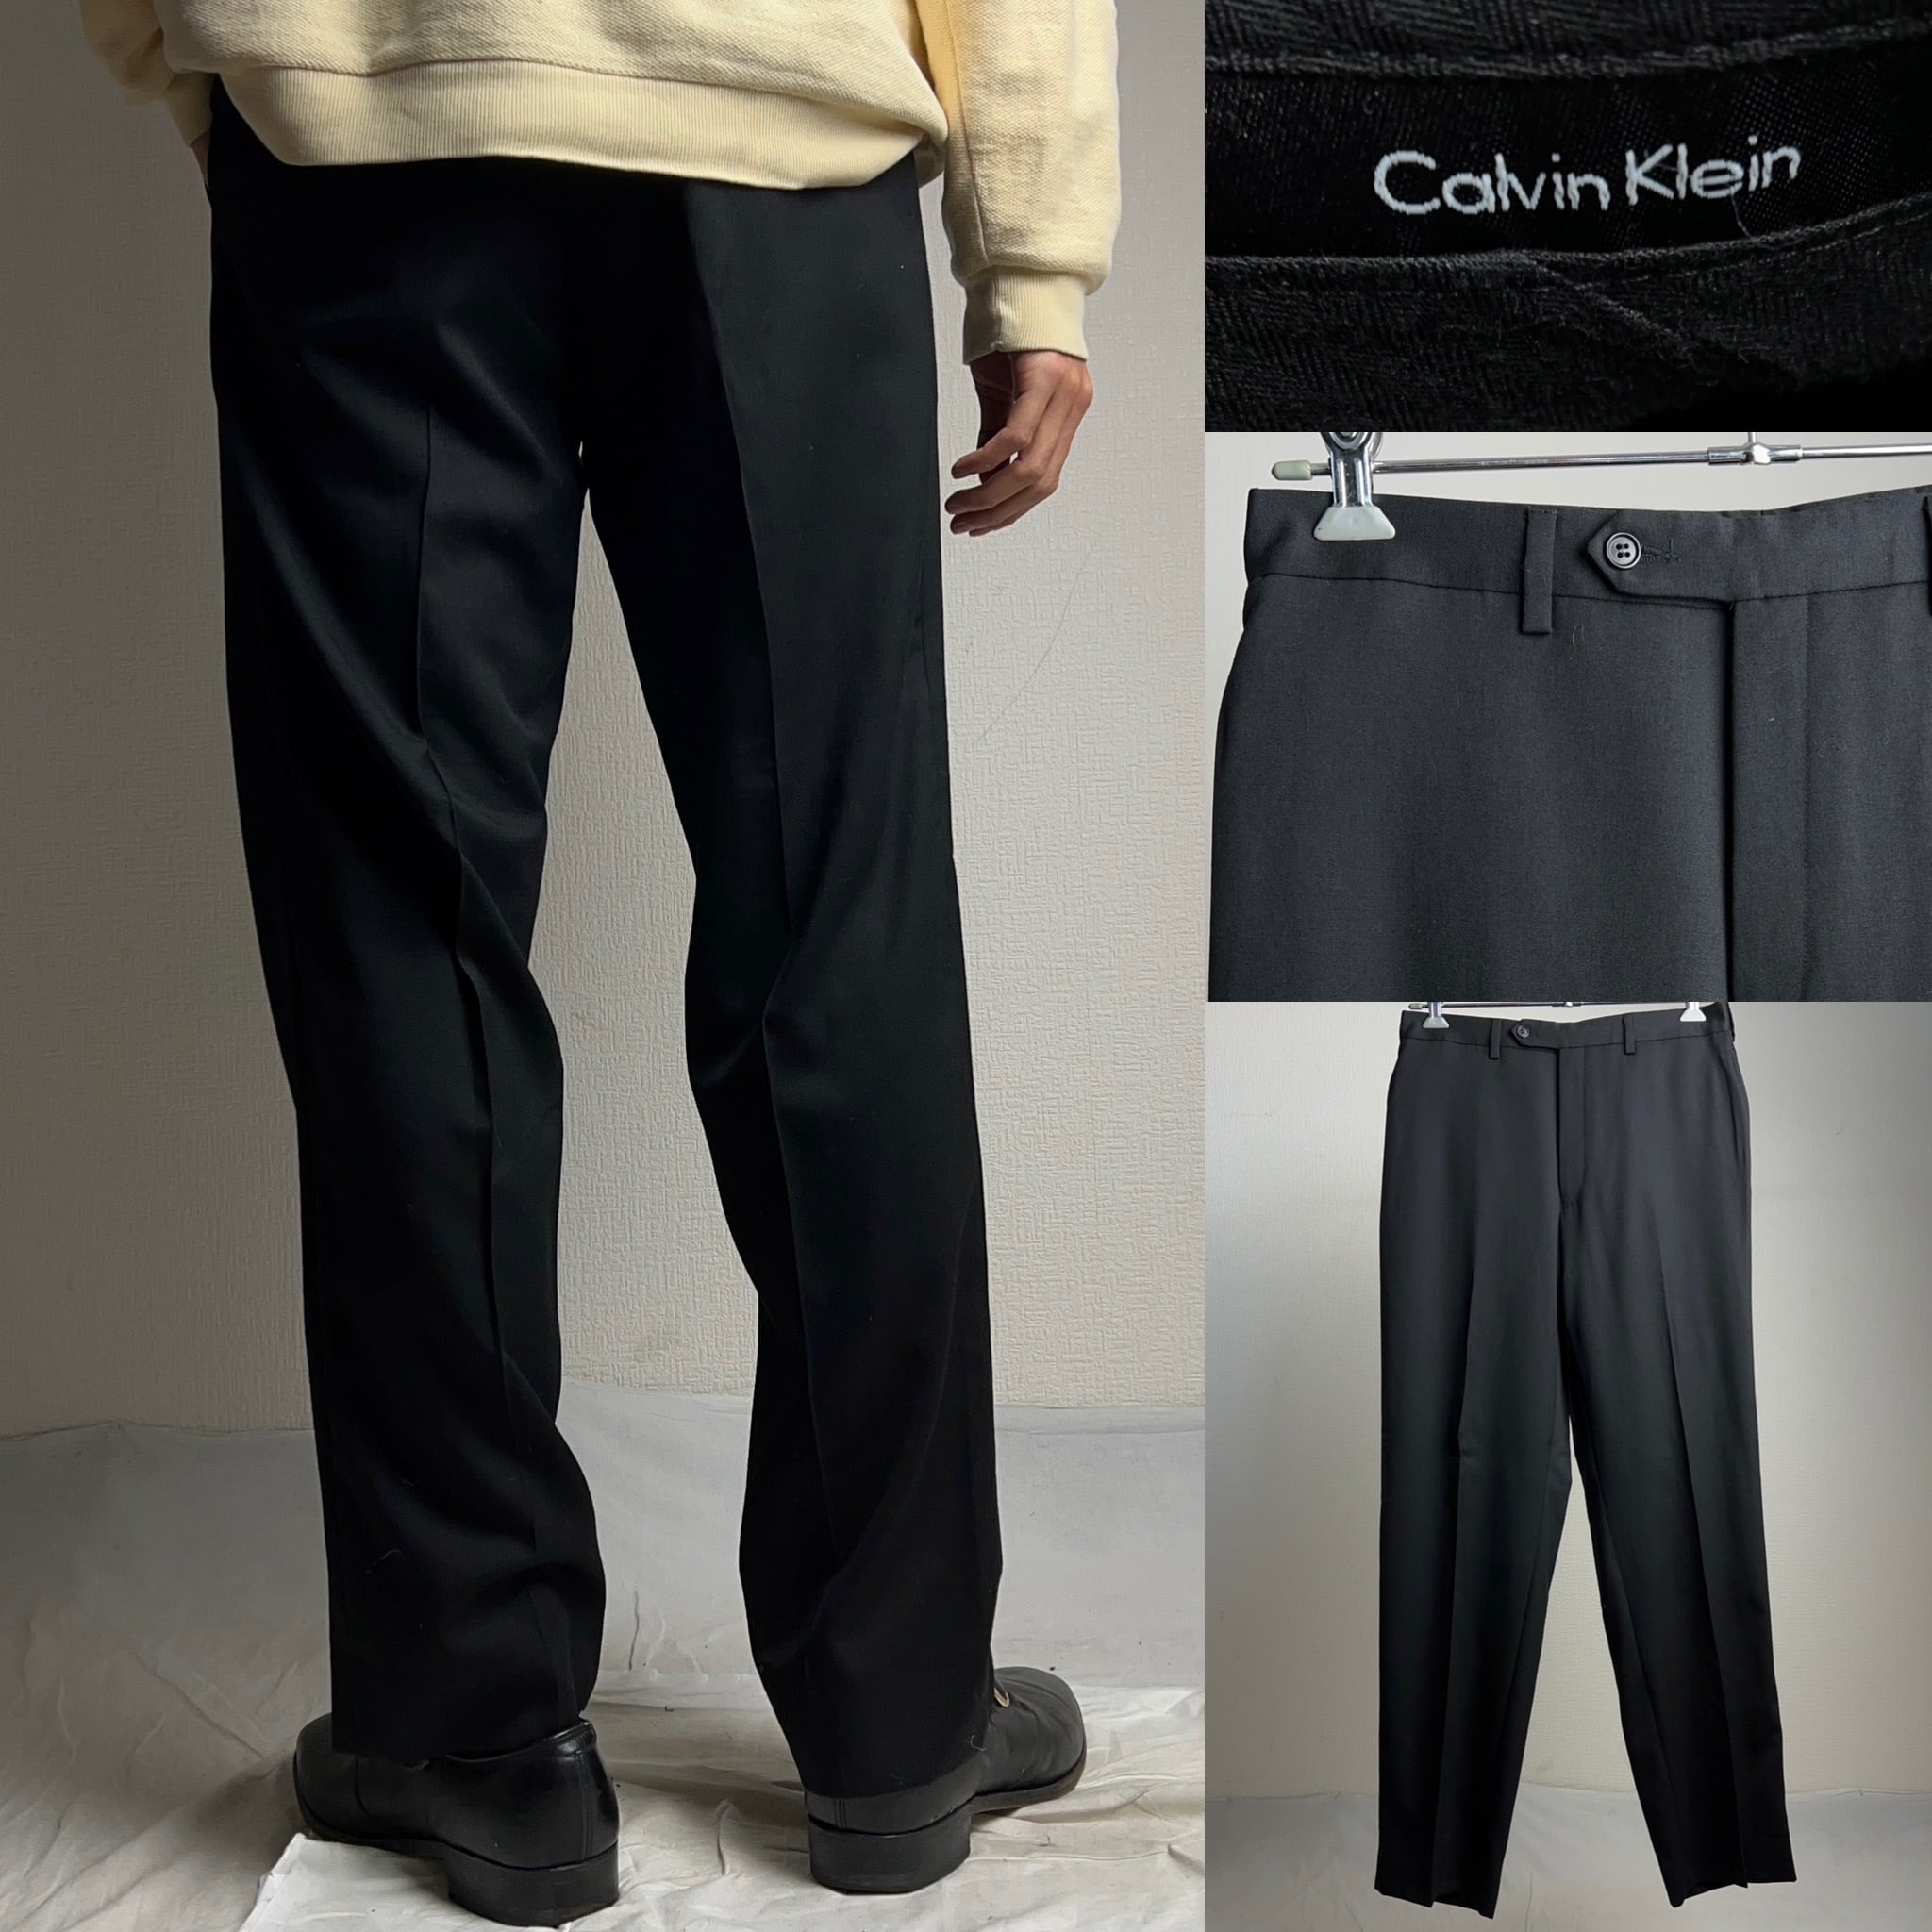 Calvin Klein Black Slacks カルバンクライン ブラックスラックス 